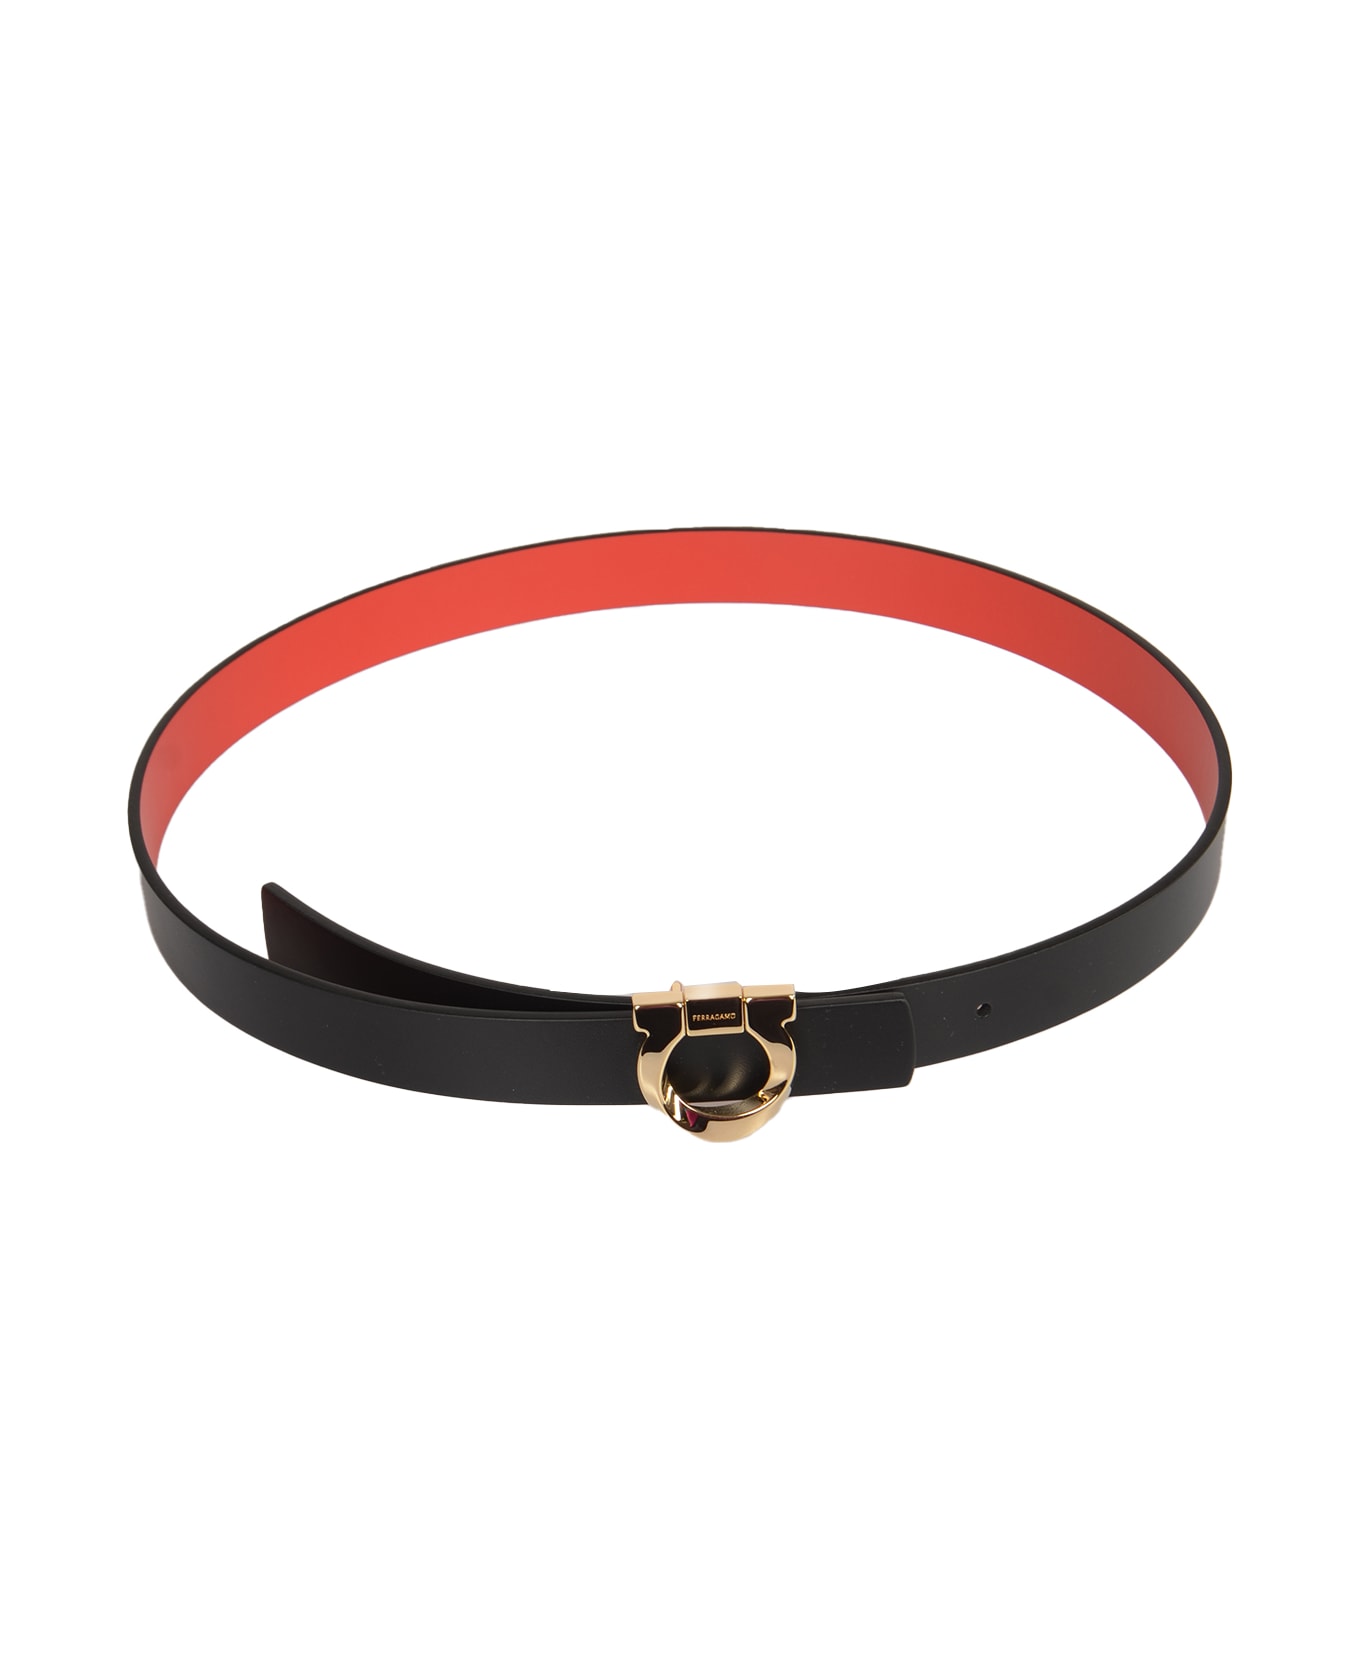 Ferragamo Gancini Buckle Belt - Black/Flame Red